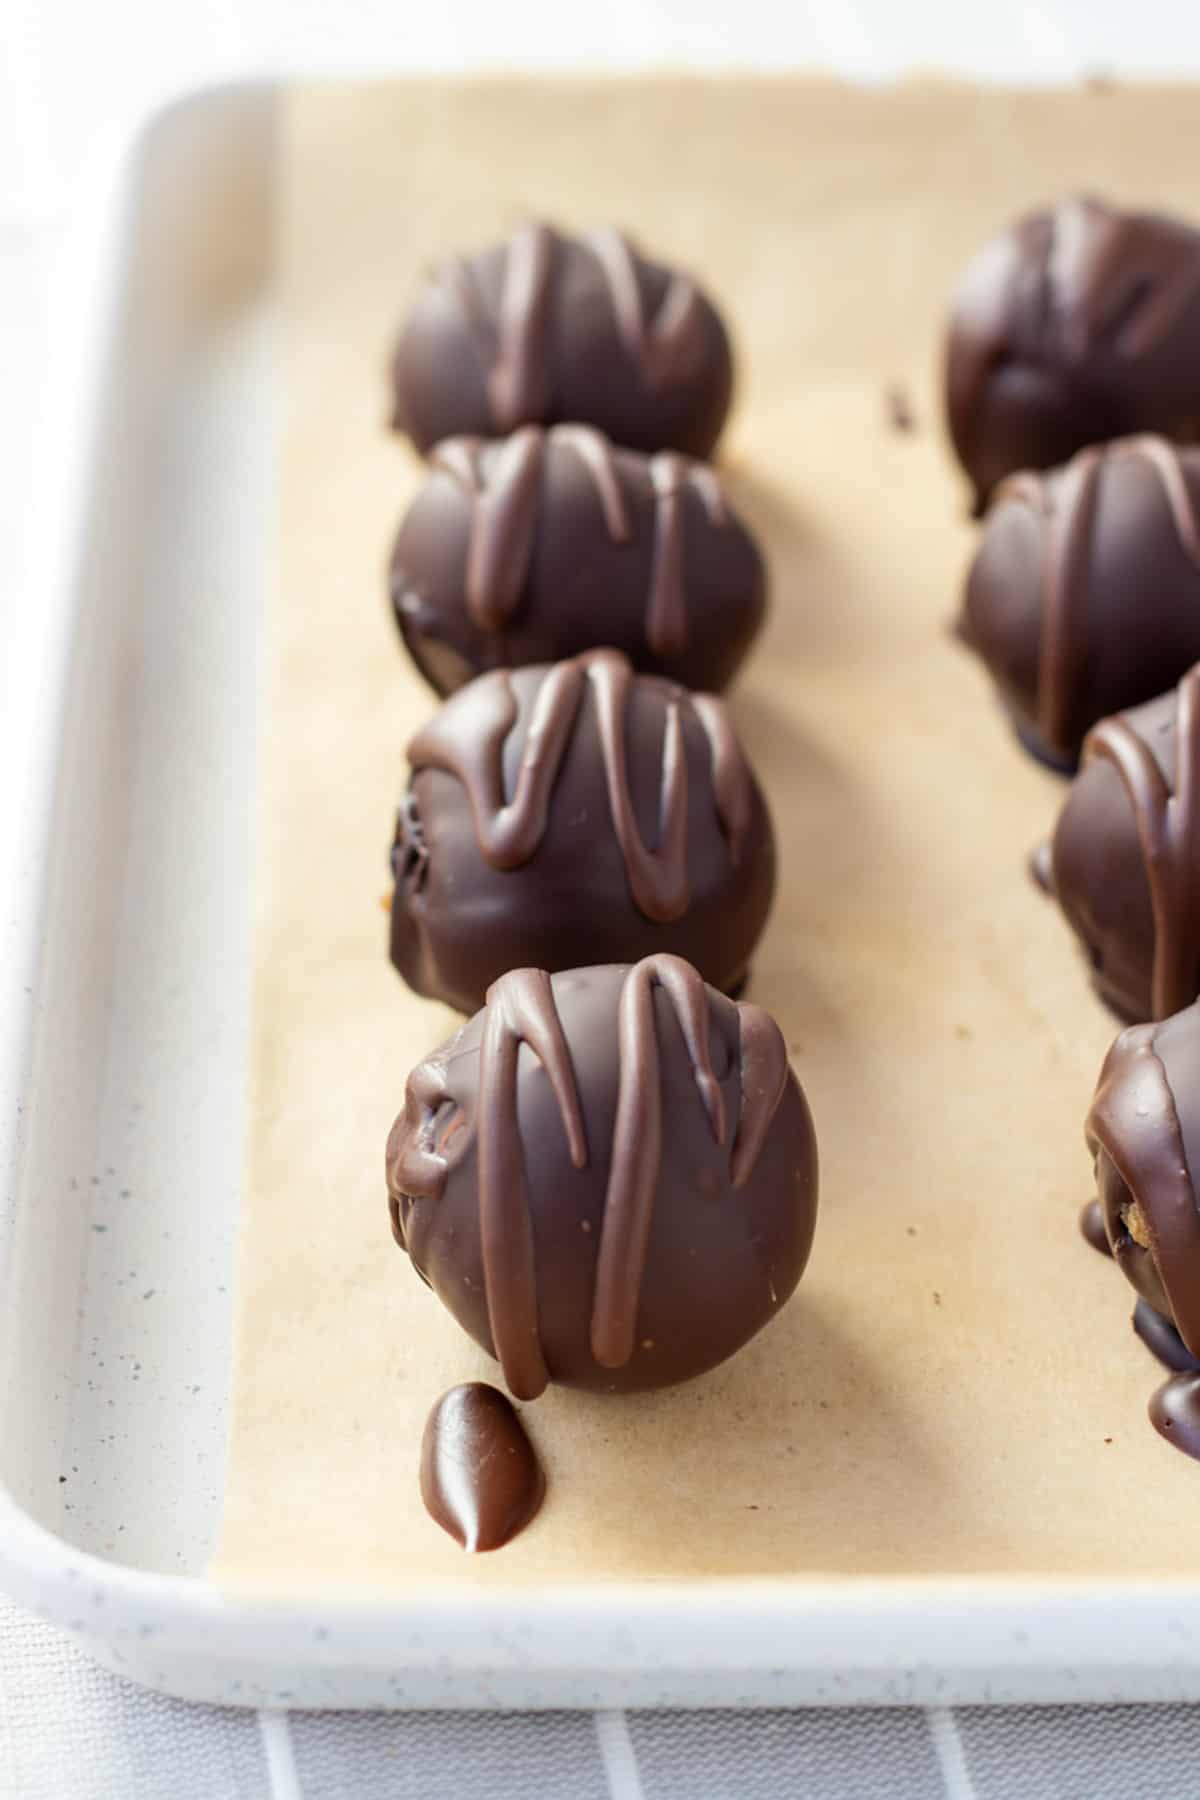 rows of chocolate-coated vegan cookie dough bites.